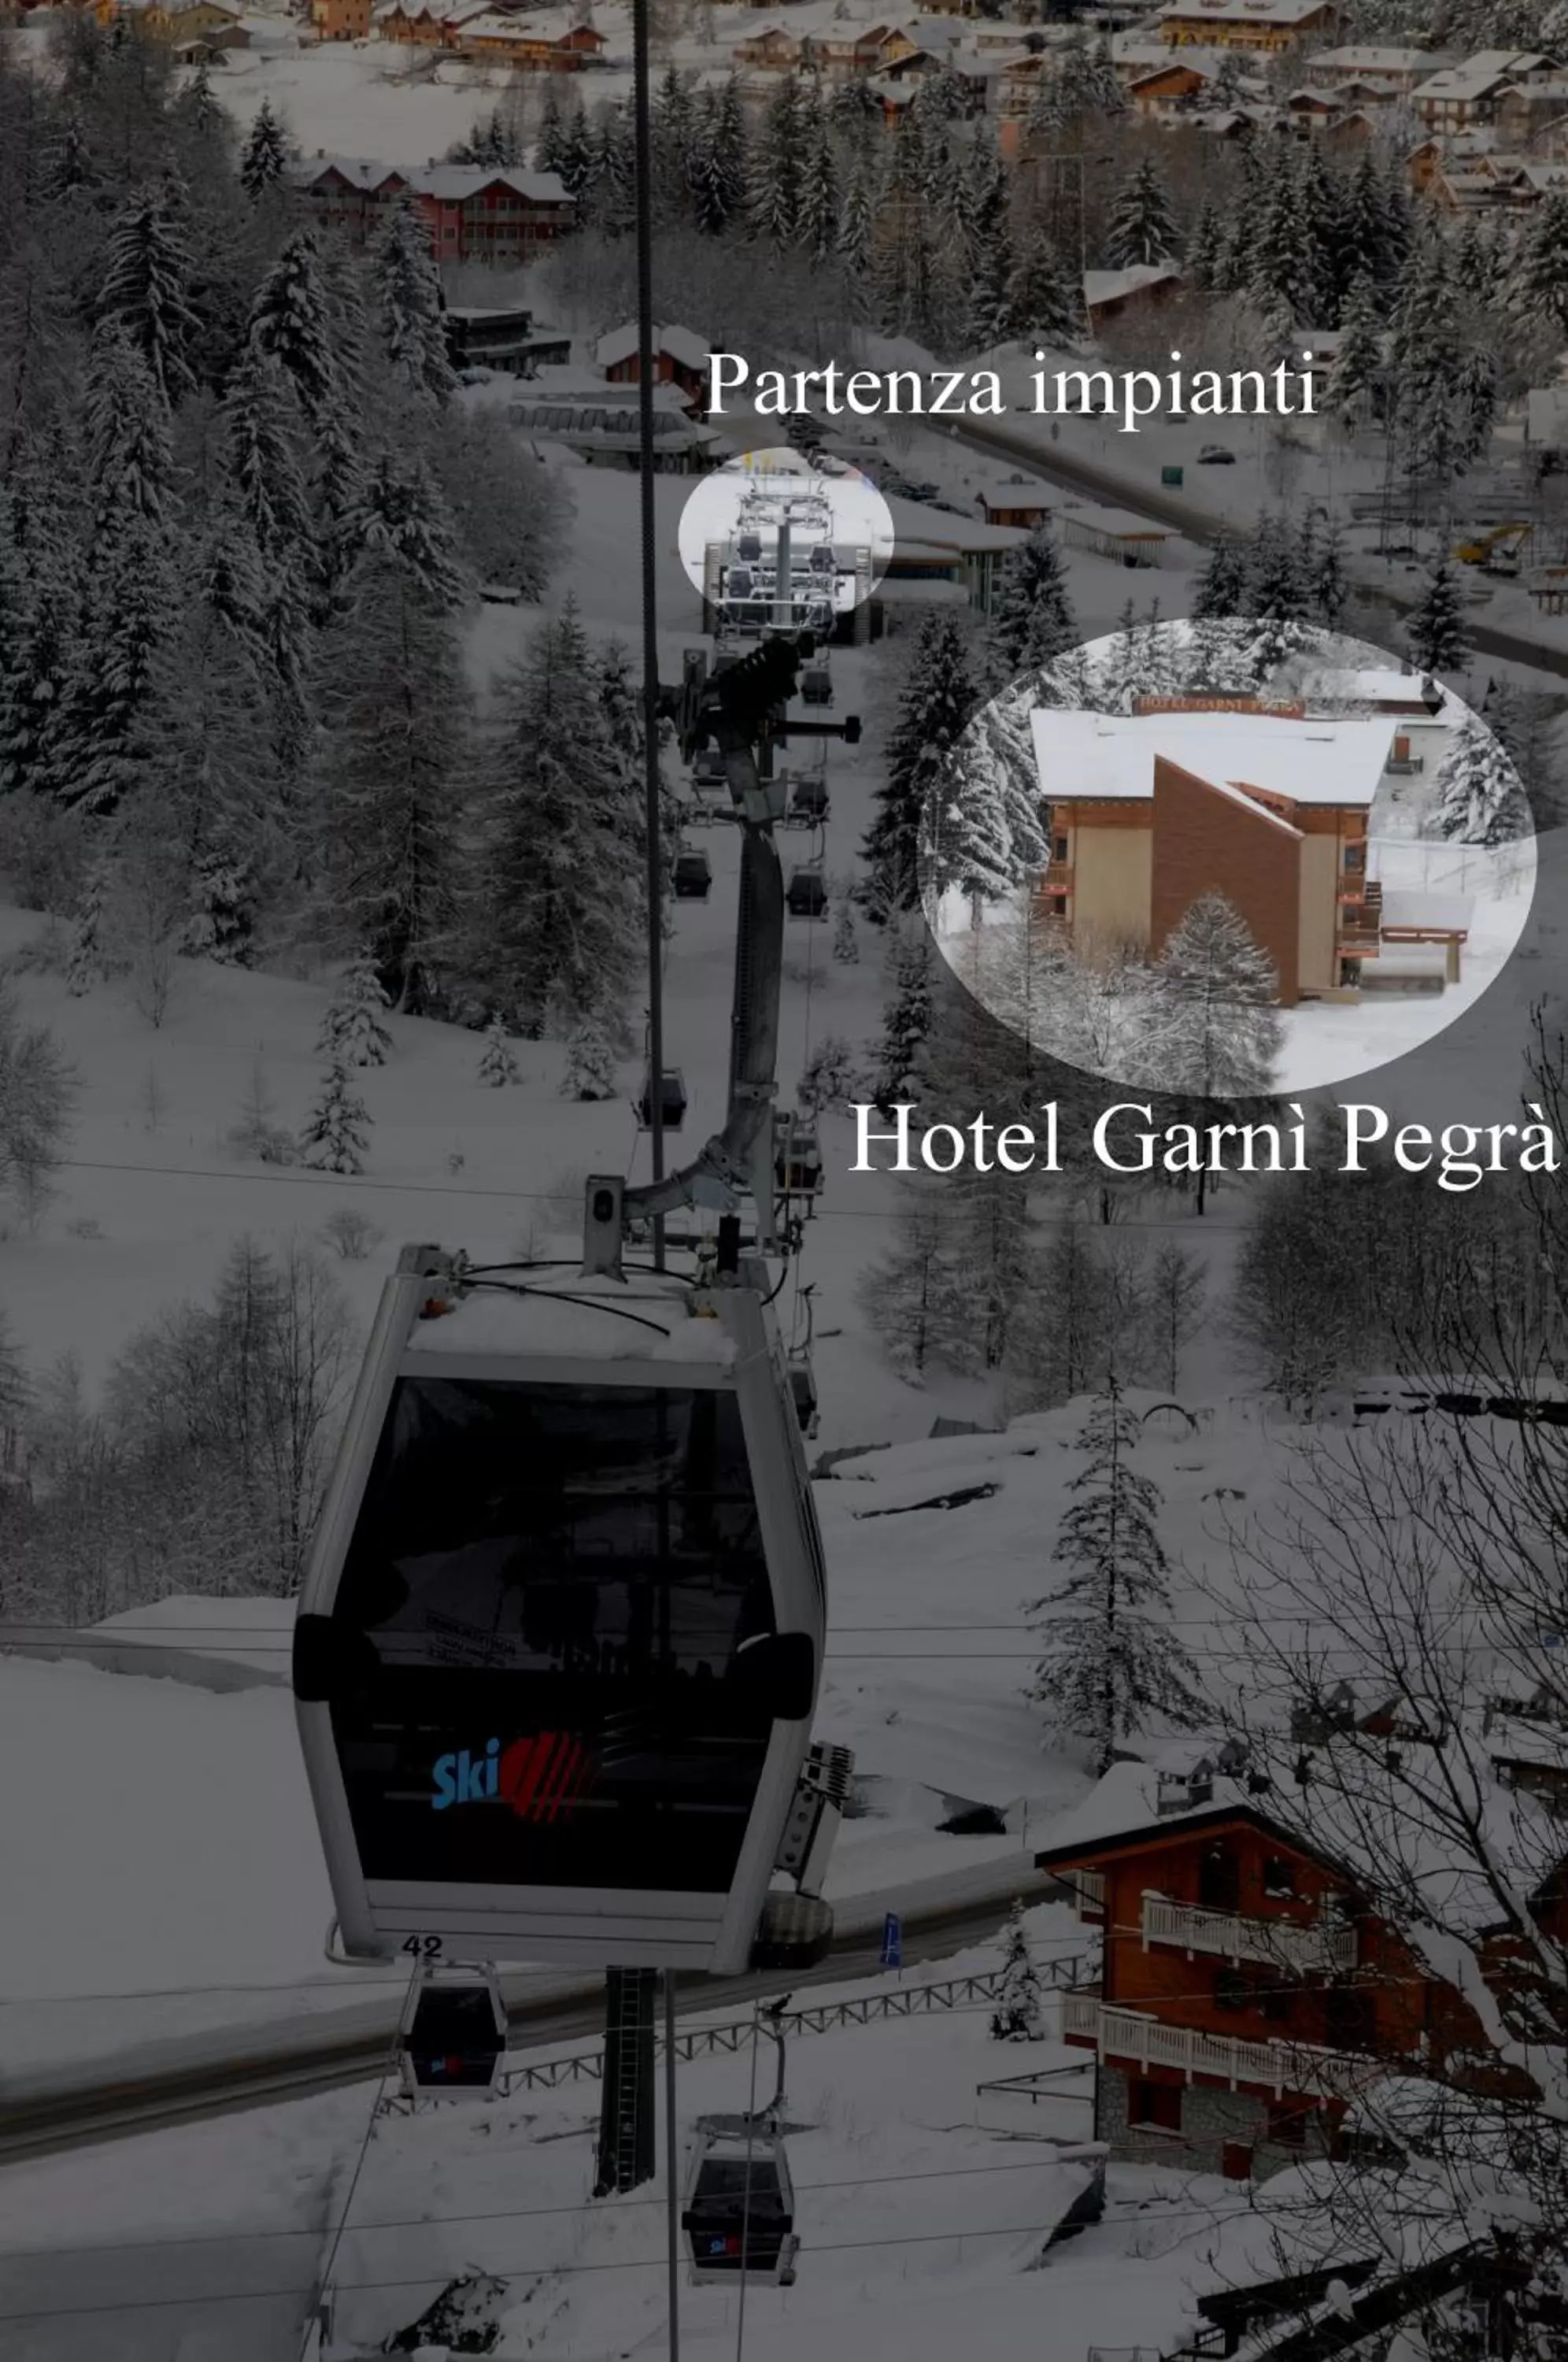 Bird's eye view, Winter in Hotel Garni Pegrà